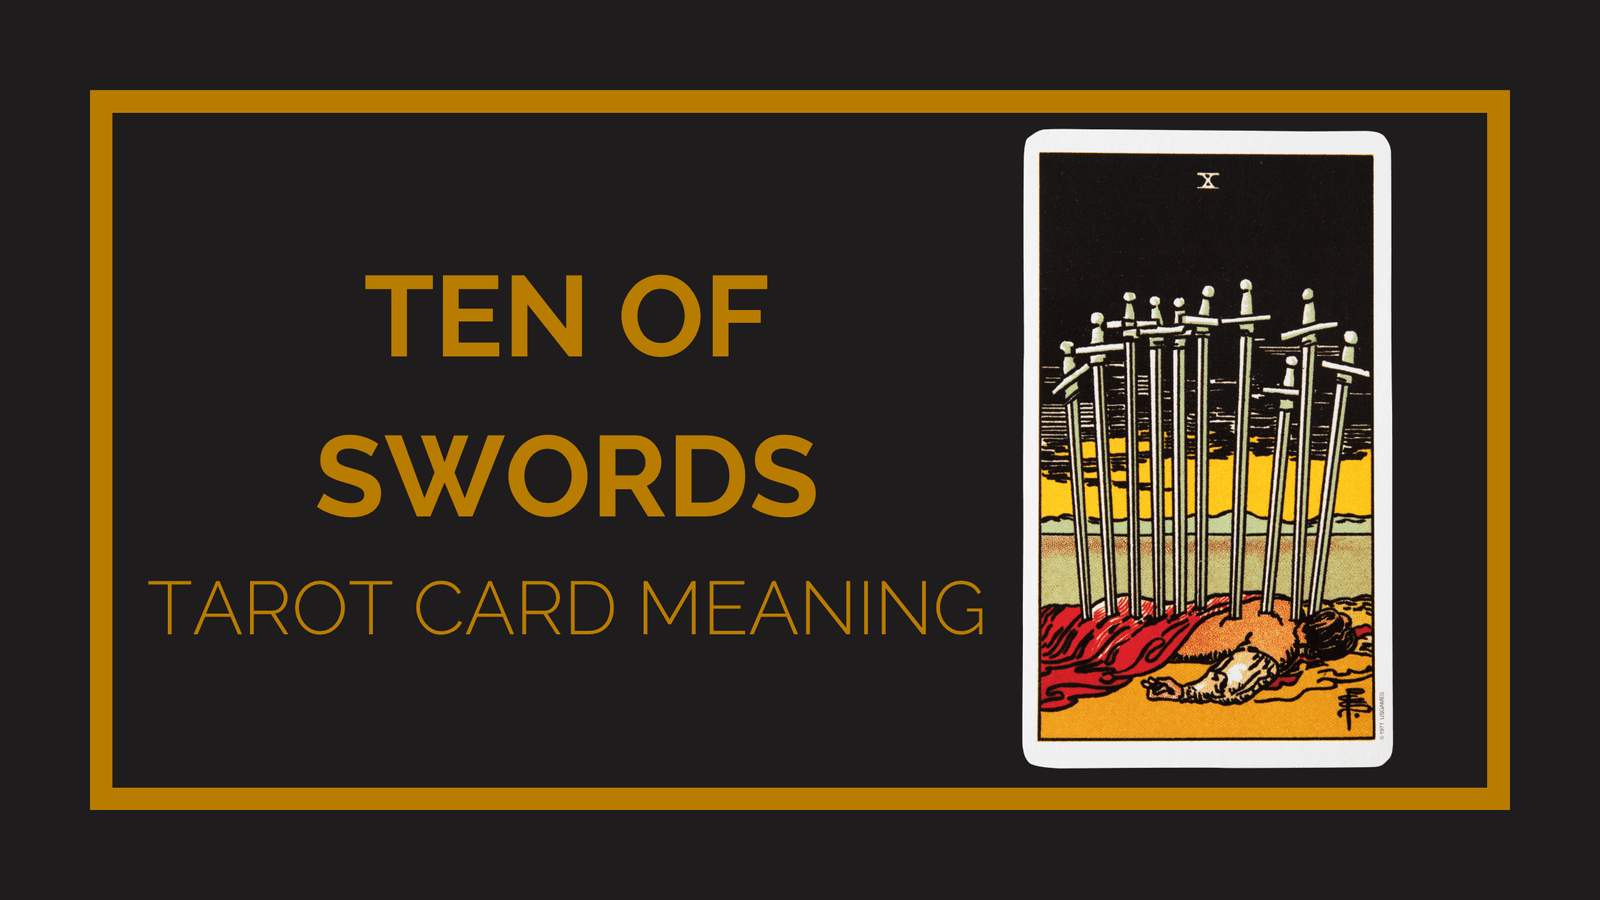 Ten of swords tarot card meaning | tarot with gord